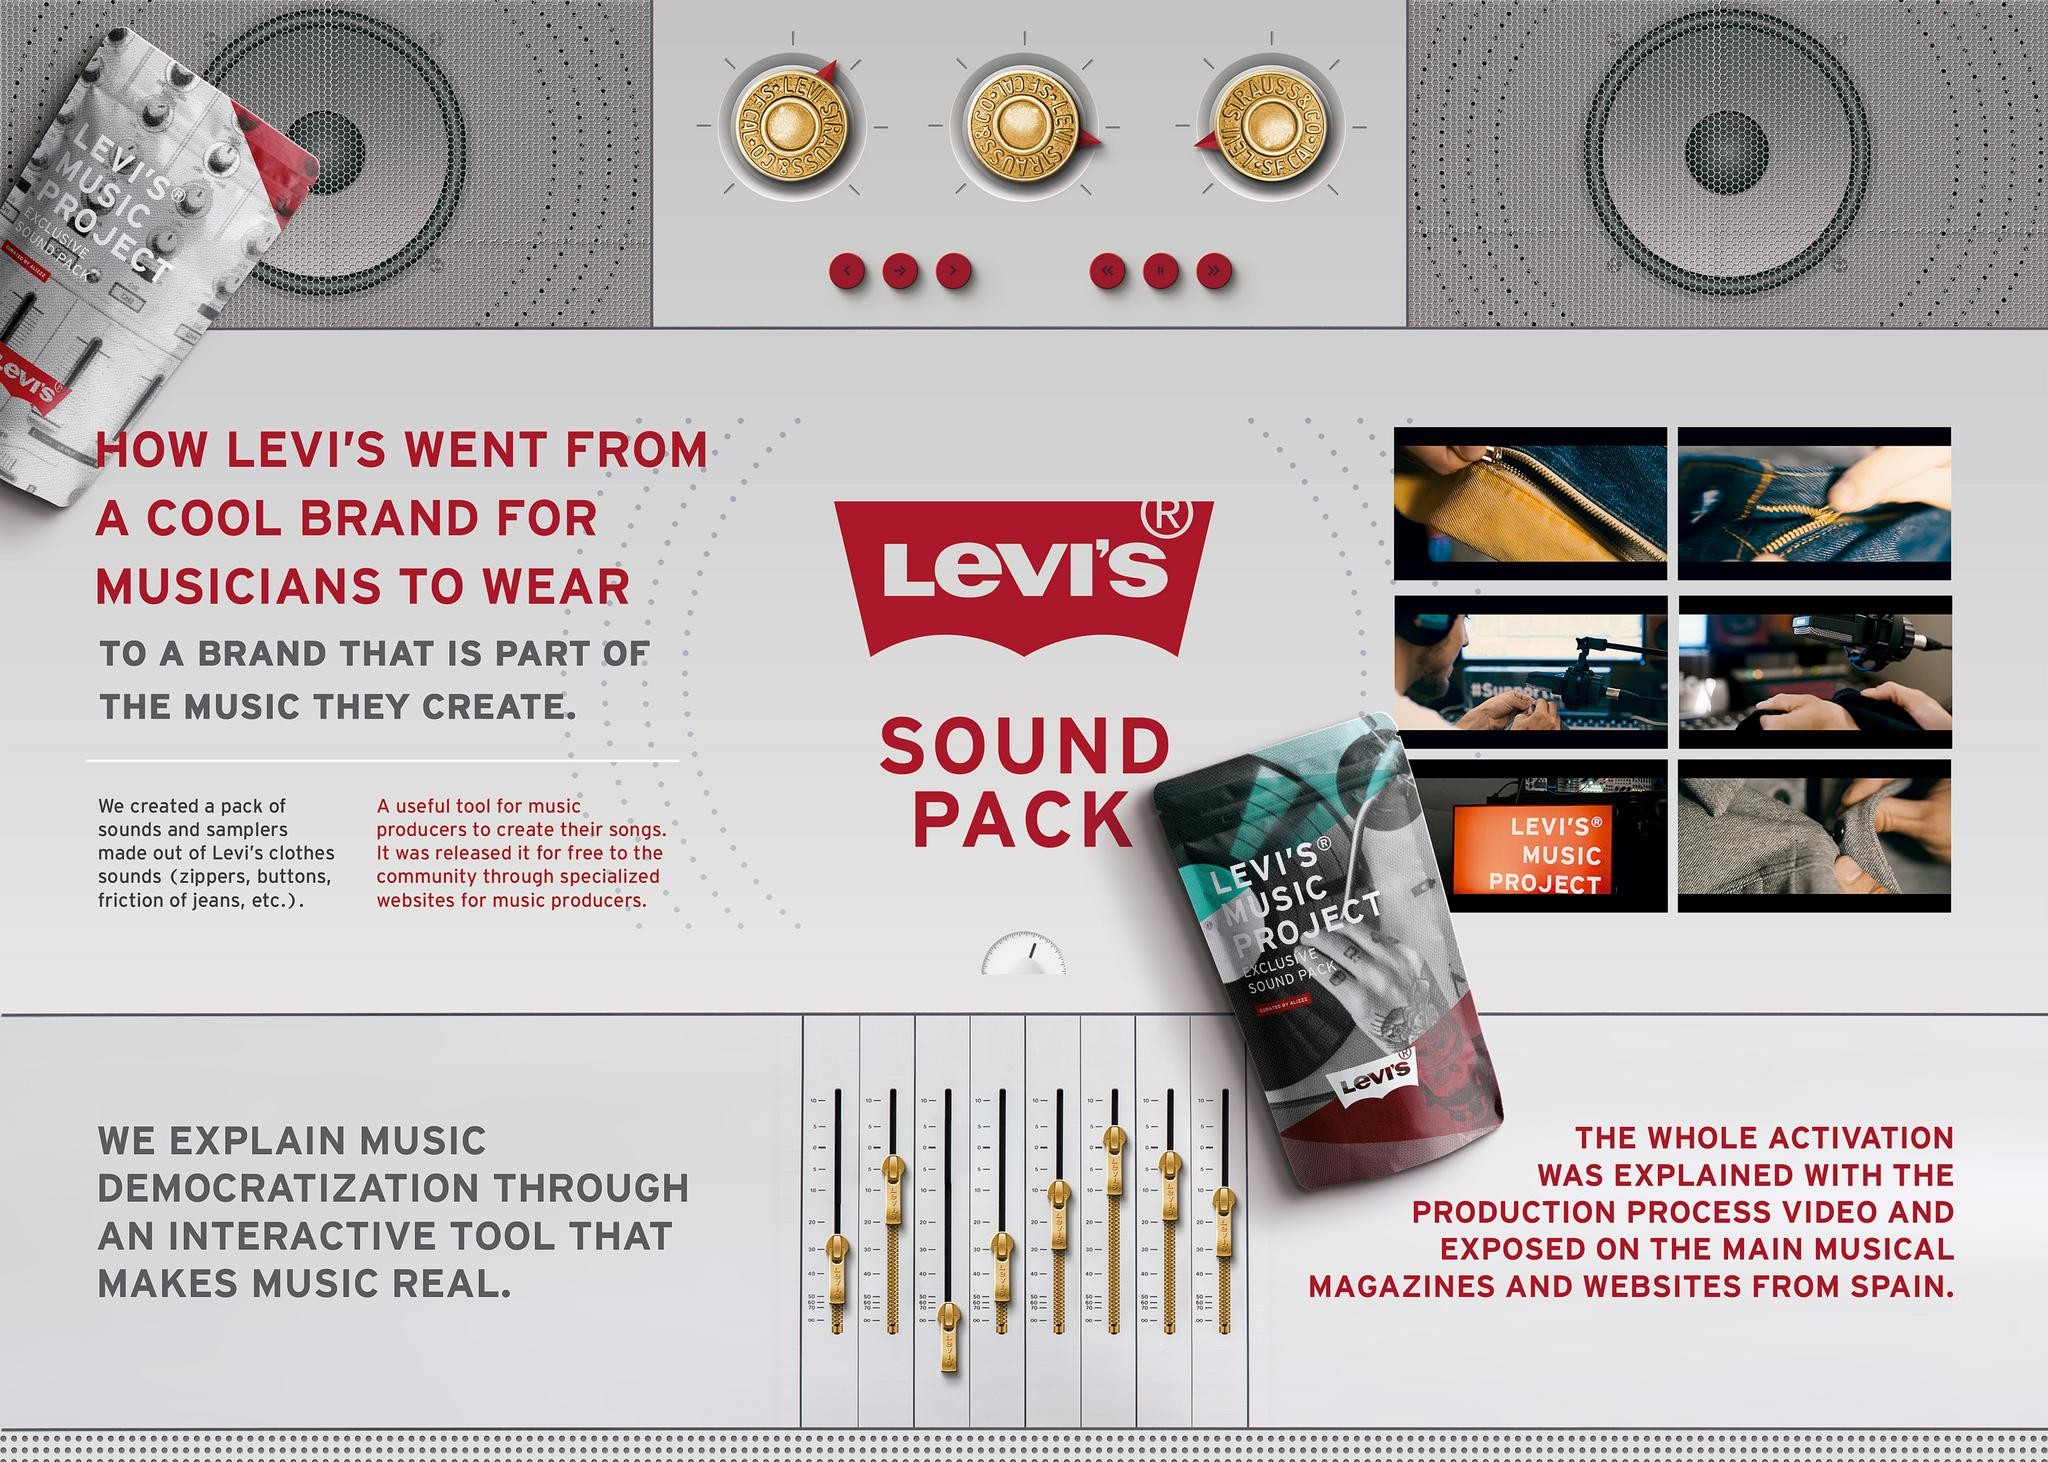 Levi's Sound Pack